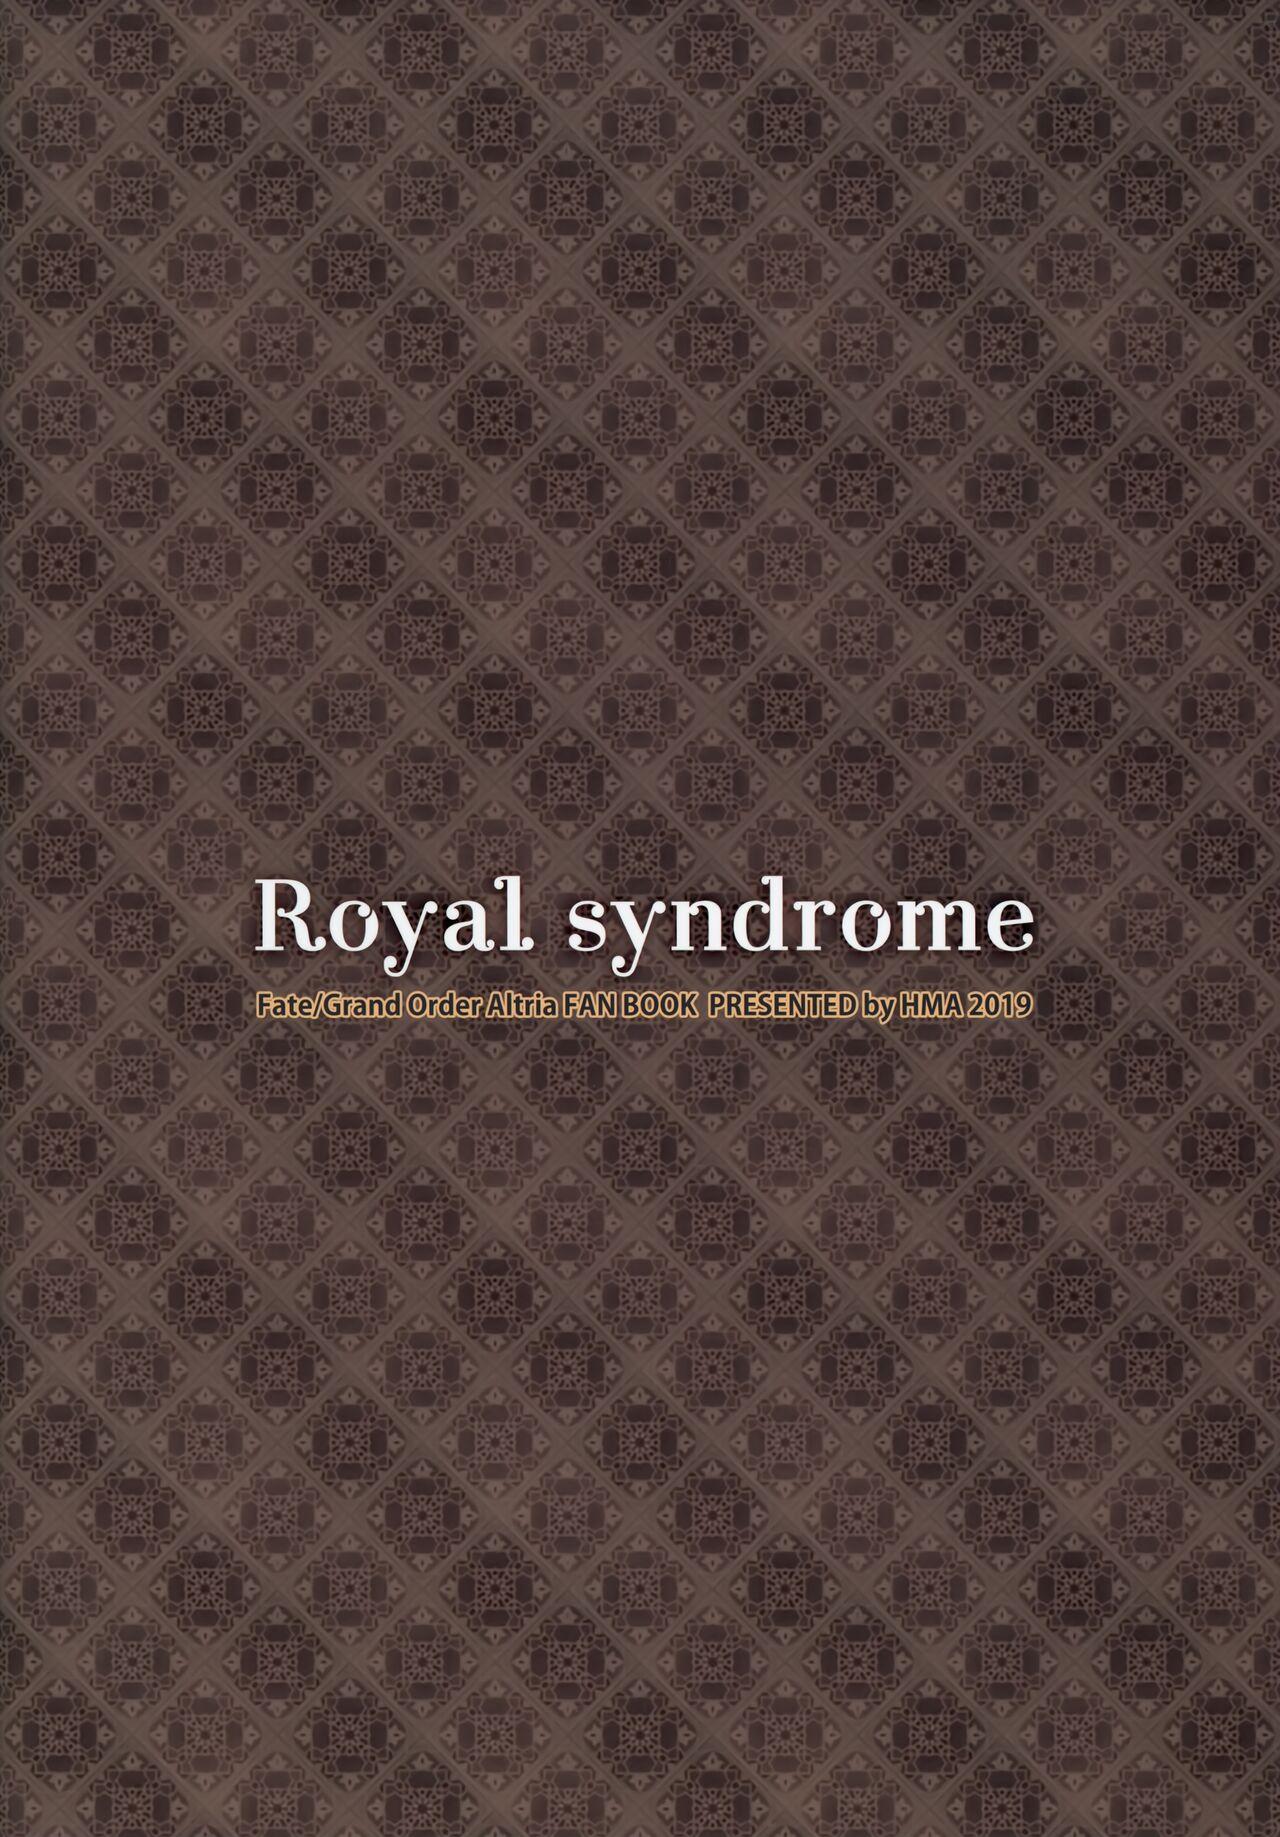 Royal syndrome 27